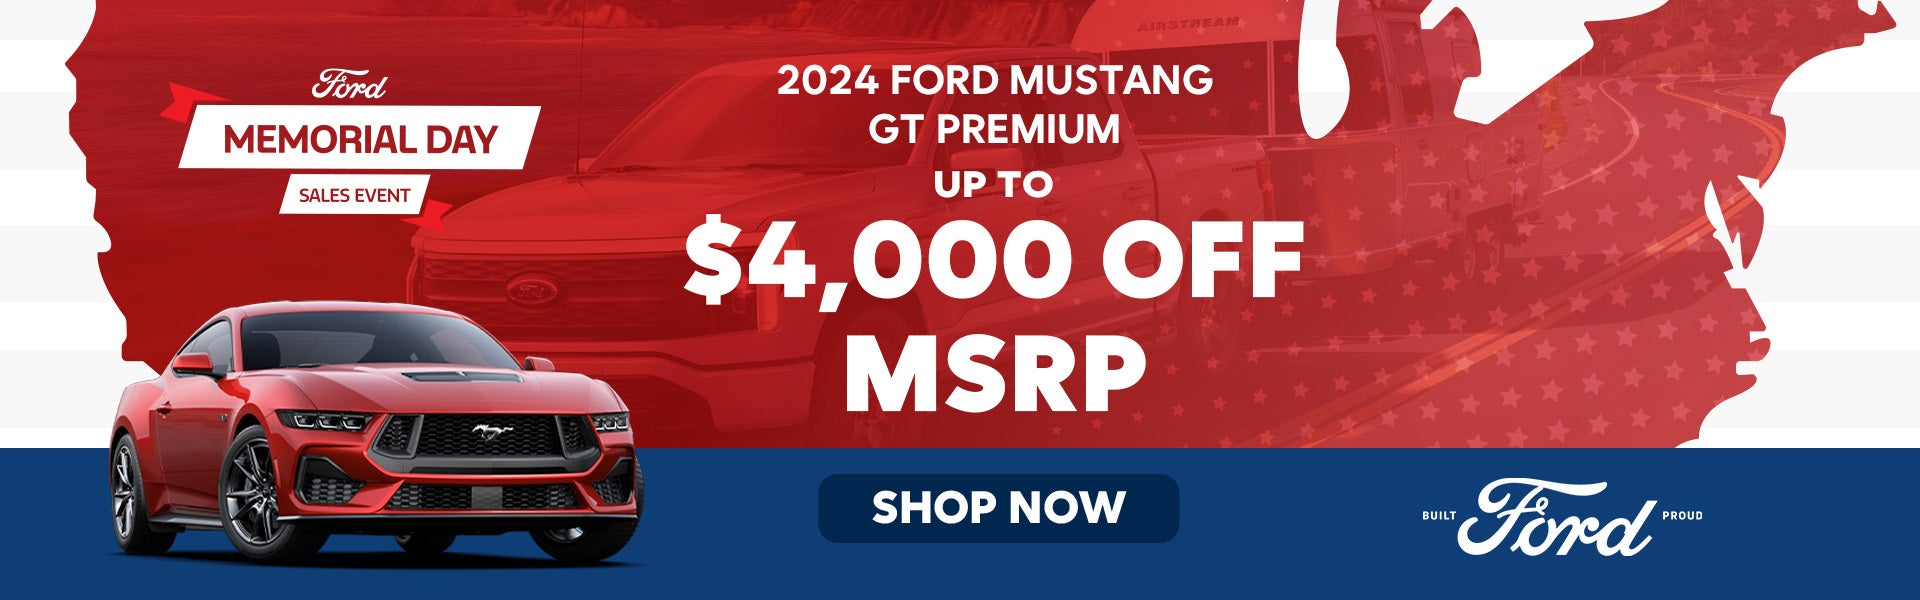 2024 Ford Mustang GT Premium 